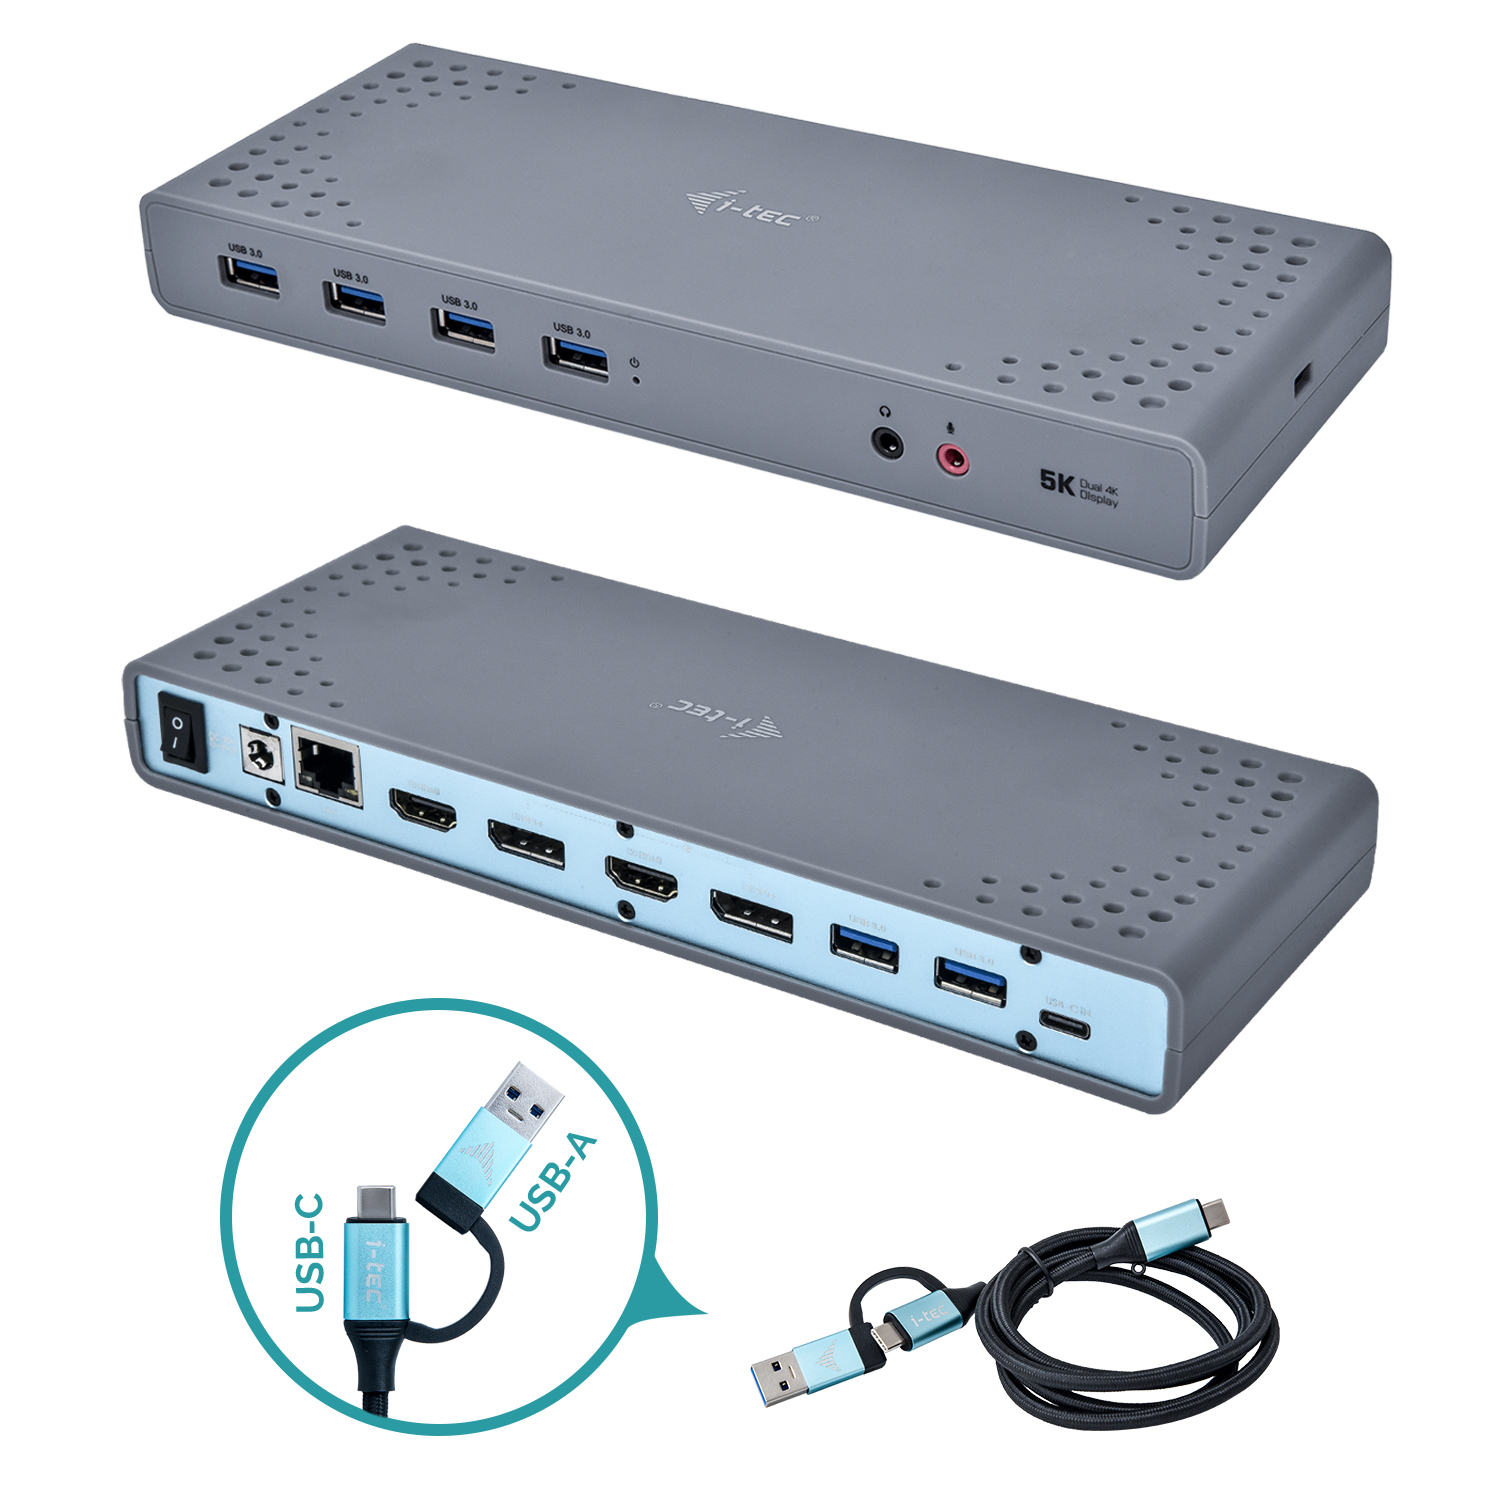  USB 3.0/USB-C Dualdock 1x 5K 2x 4K 60Hz 2x HDMI 2x DP 1x GLAN 6x USB 3.0 1x Audio/Mic Jack Kensington compatible with TB 3